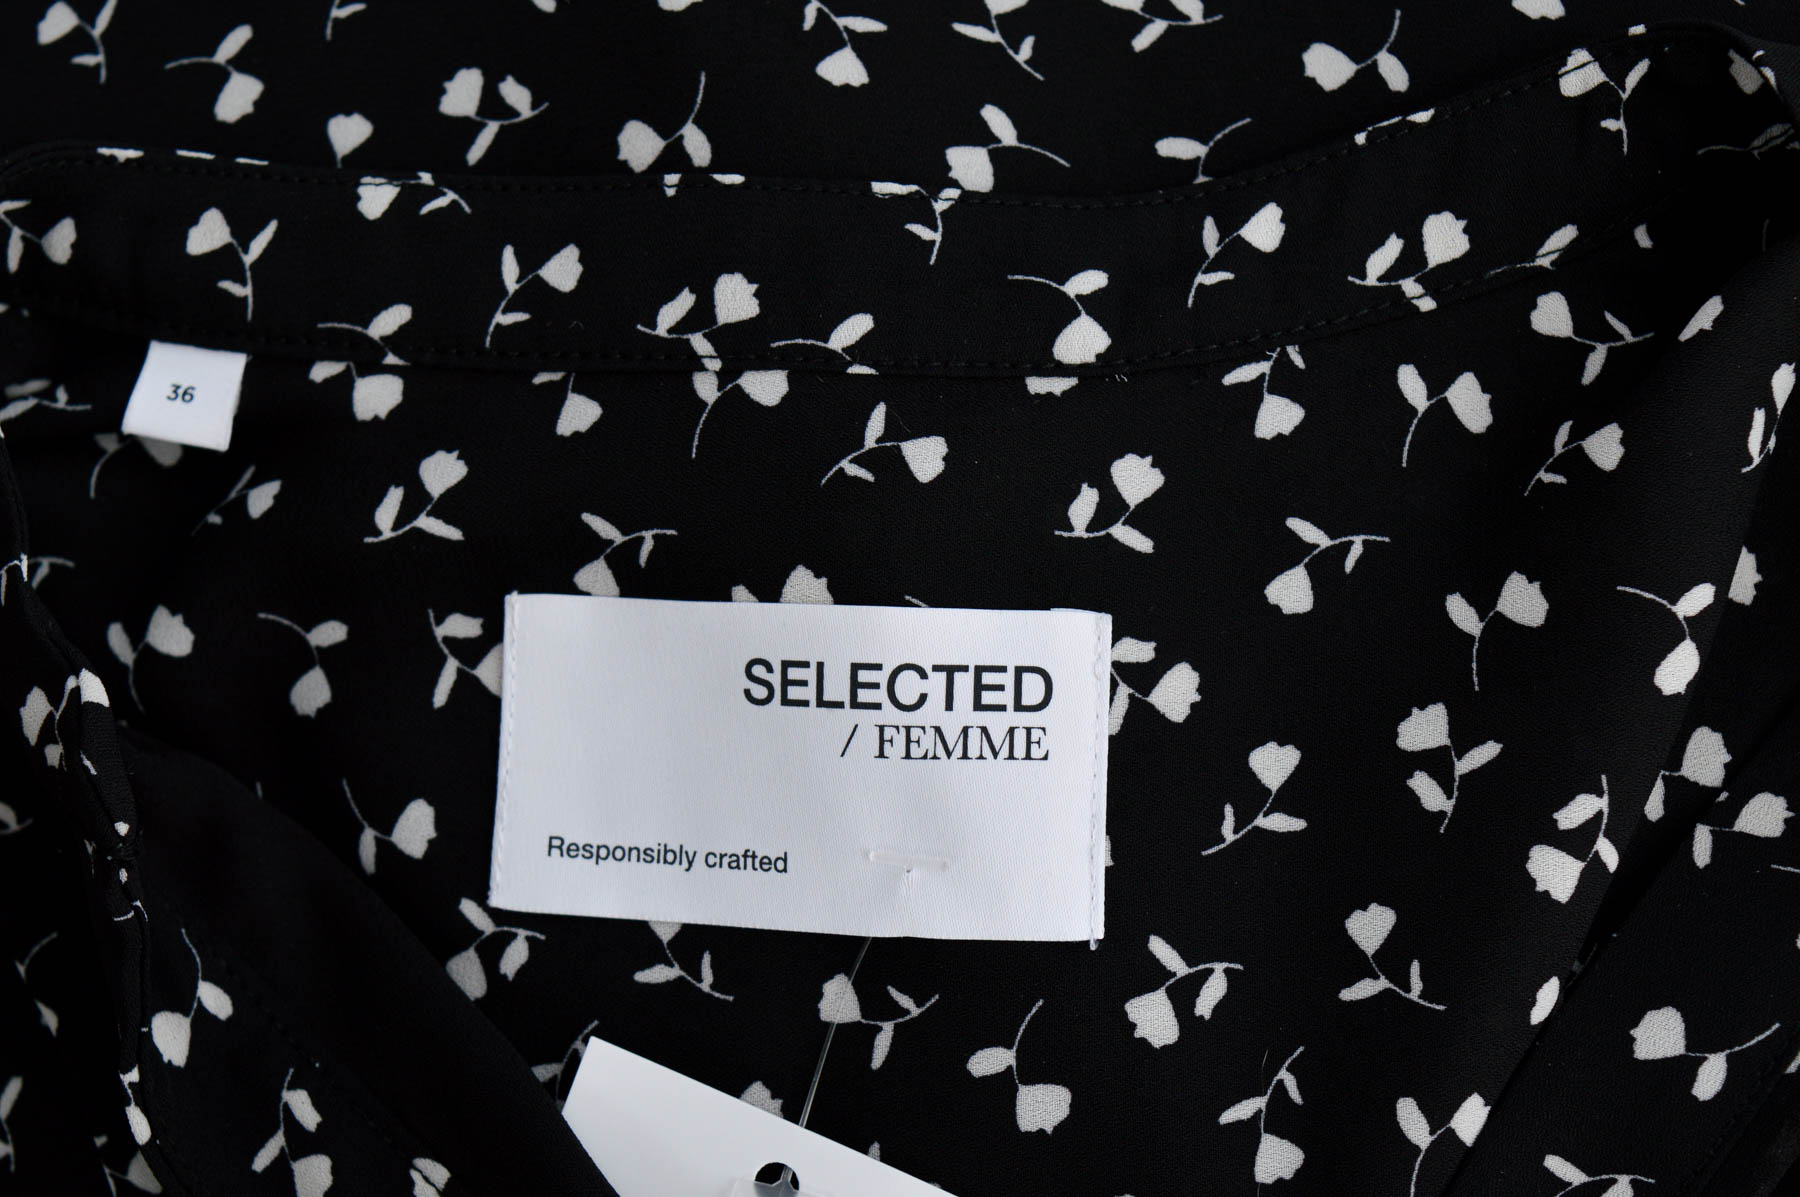 Dress - SELECTED / FEMME - 2